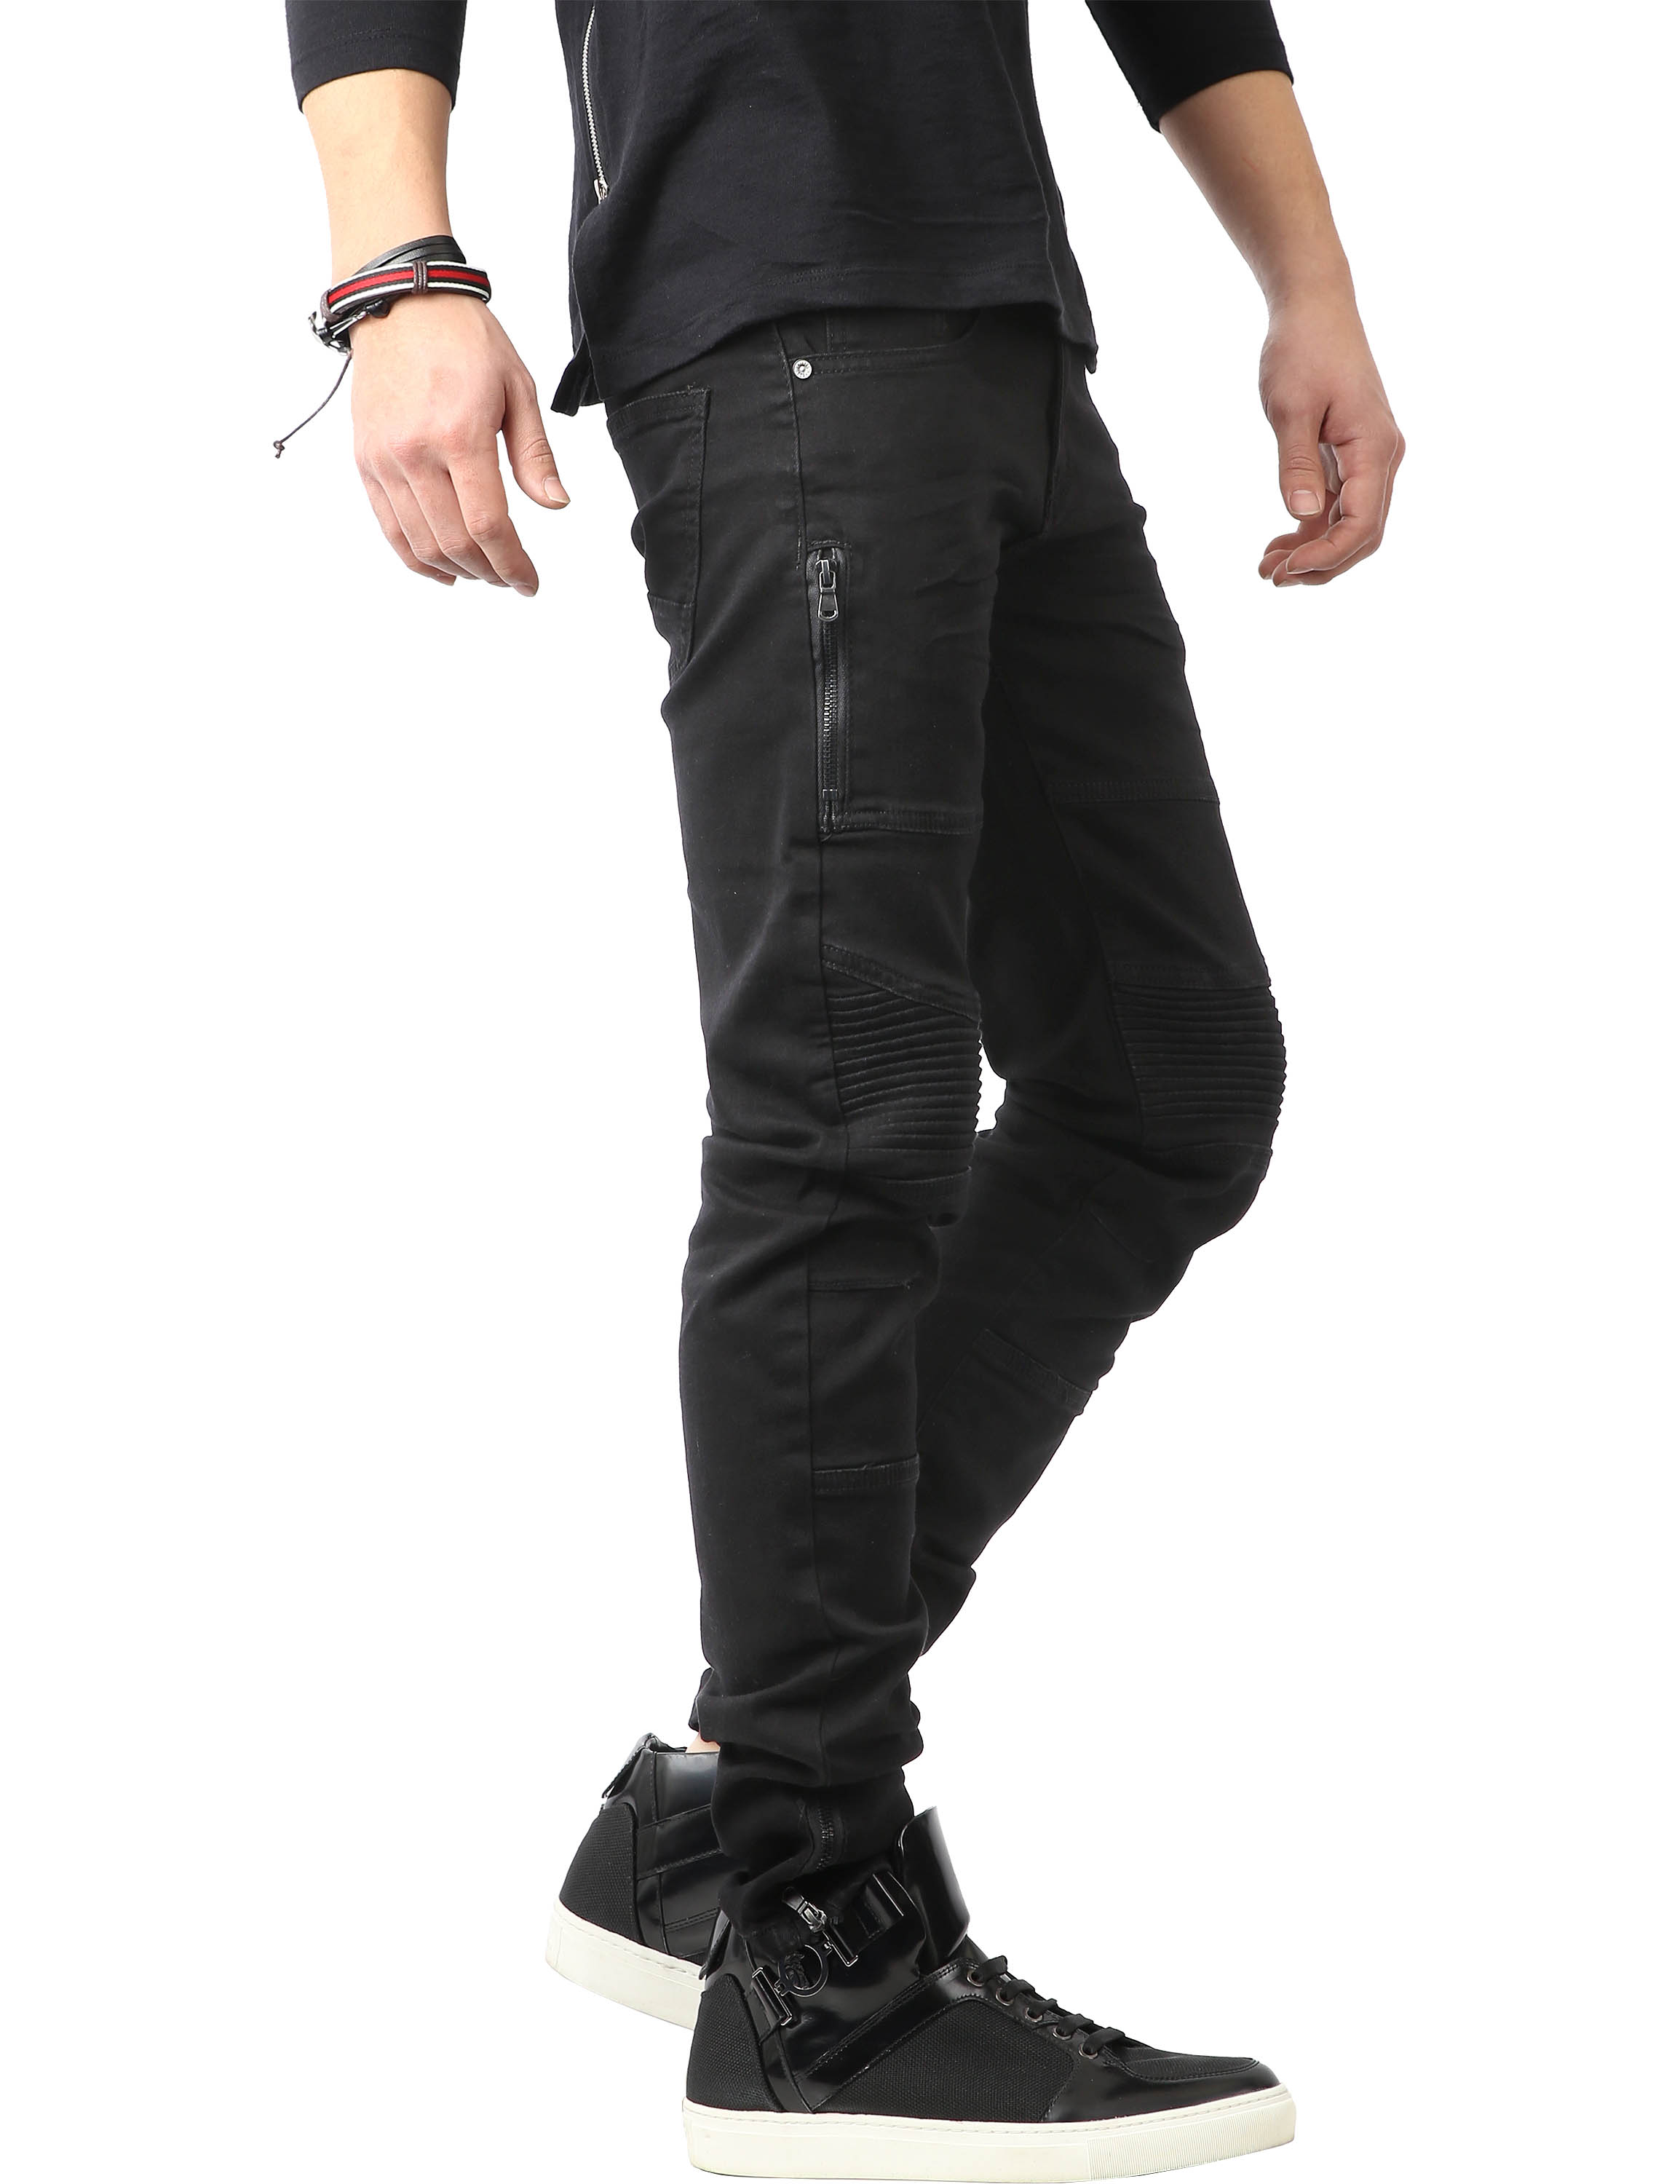 Ma Croix Mens Biker Jeans Slim Fit Distressed Ripped Zipper Stretch Denim Pants - image 3 of 6